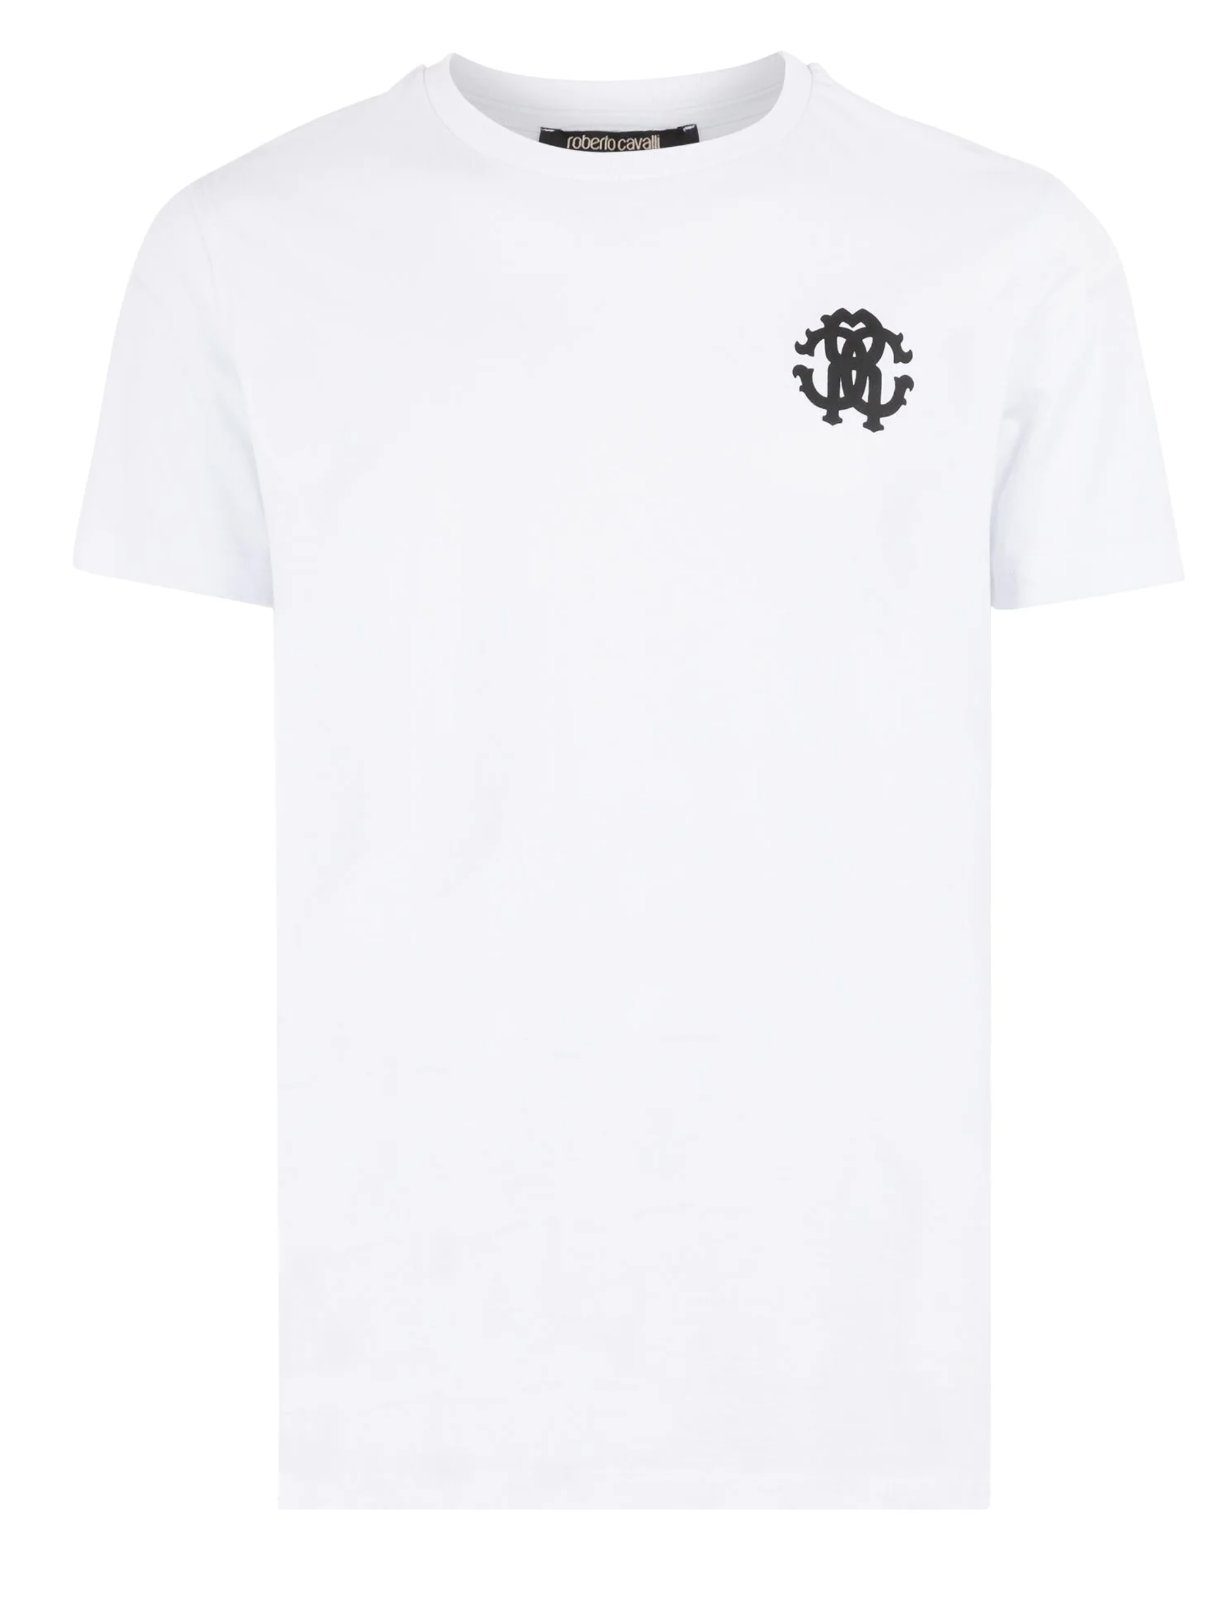 Tiger CAVALLI CLASS ROBERTO Luxury Print-Shirt Print T-shirt Logo Firenze